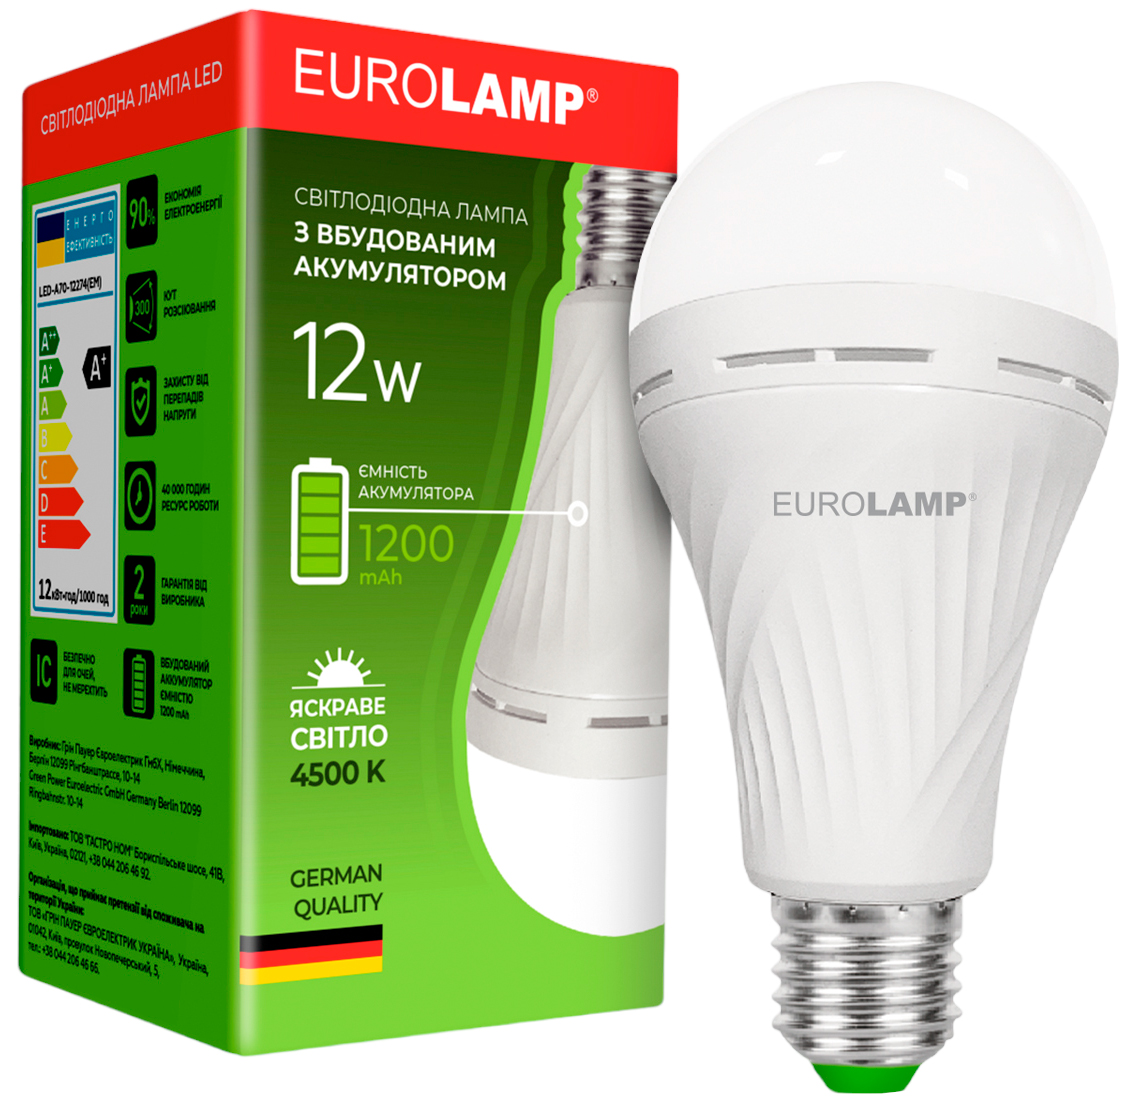 Светодиодная лампа с аккумулятором Eurolamp A70 12W 4500K 220V E27 (LED-A70-12274(EM) в интернет-магазине, главное фото